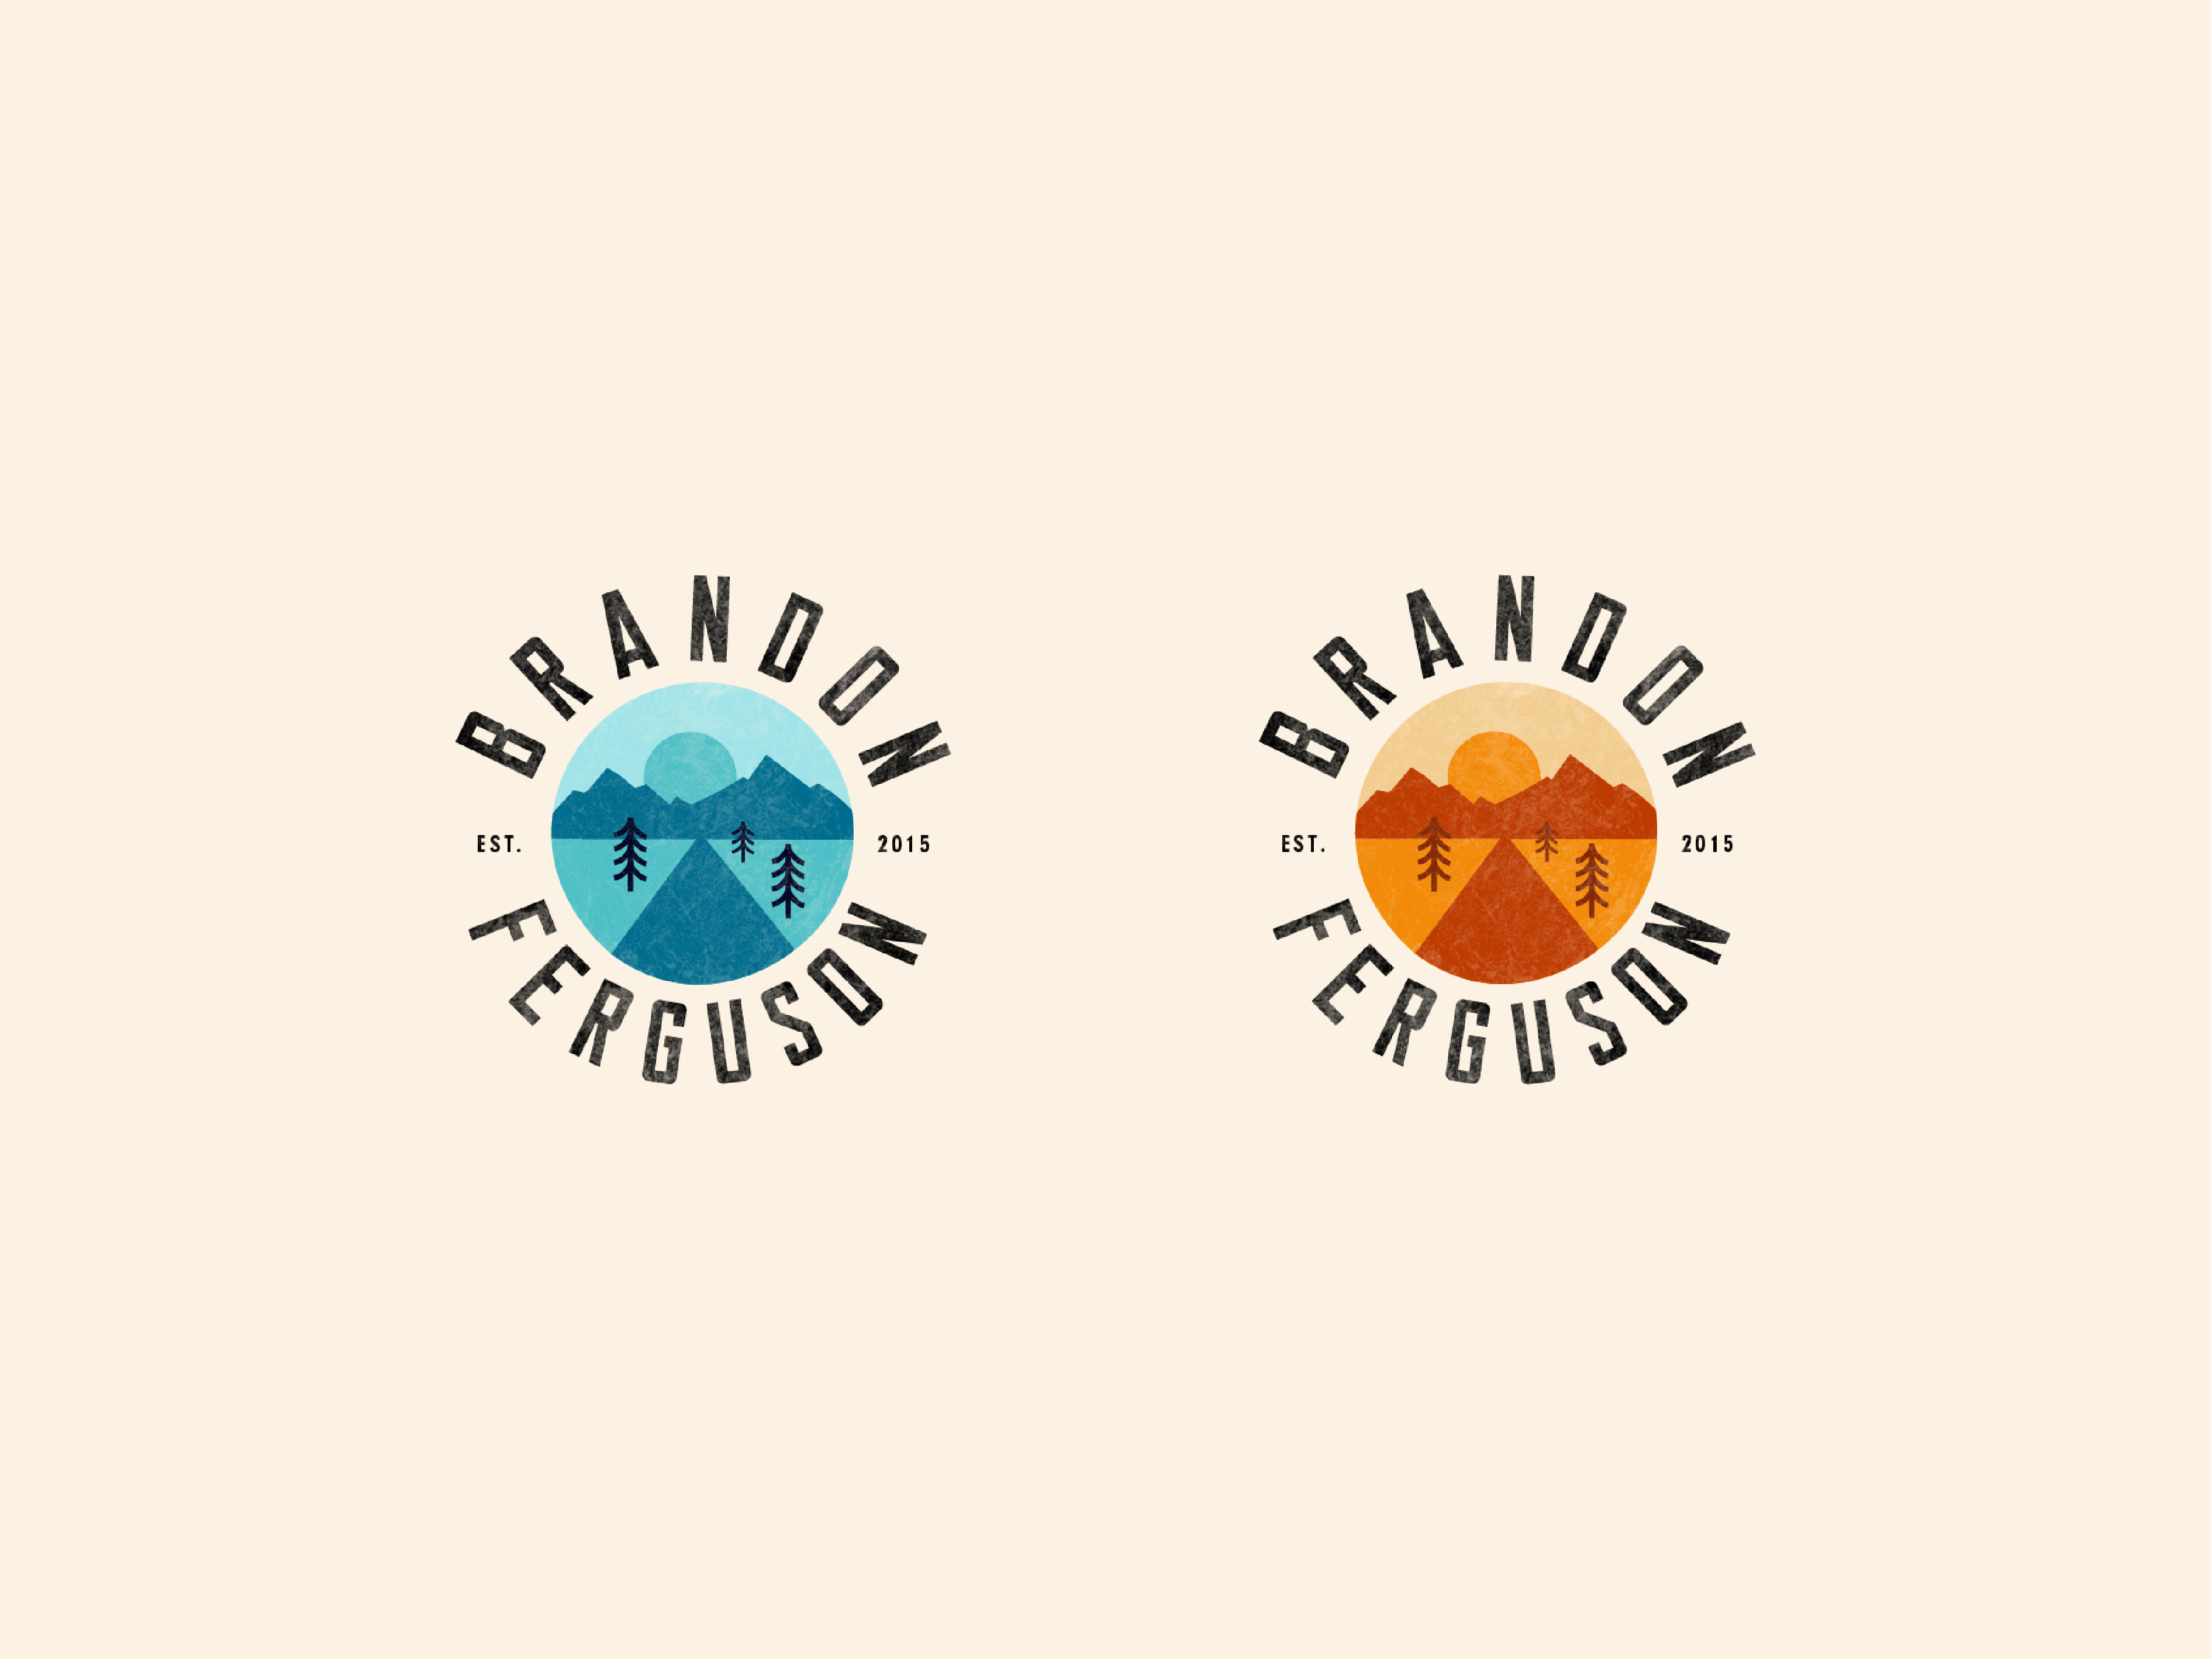 Brandon Ferguson logos in both blue and yellow toned